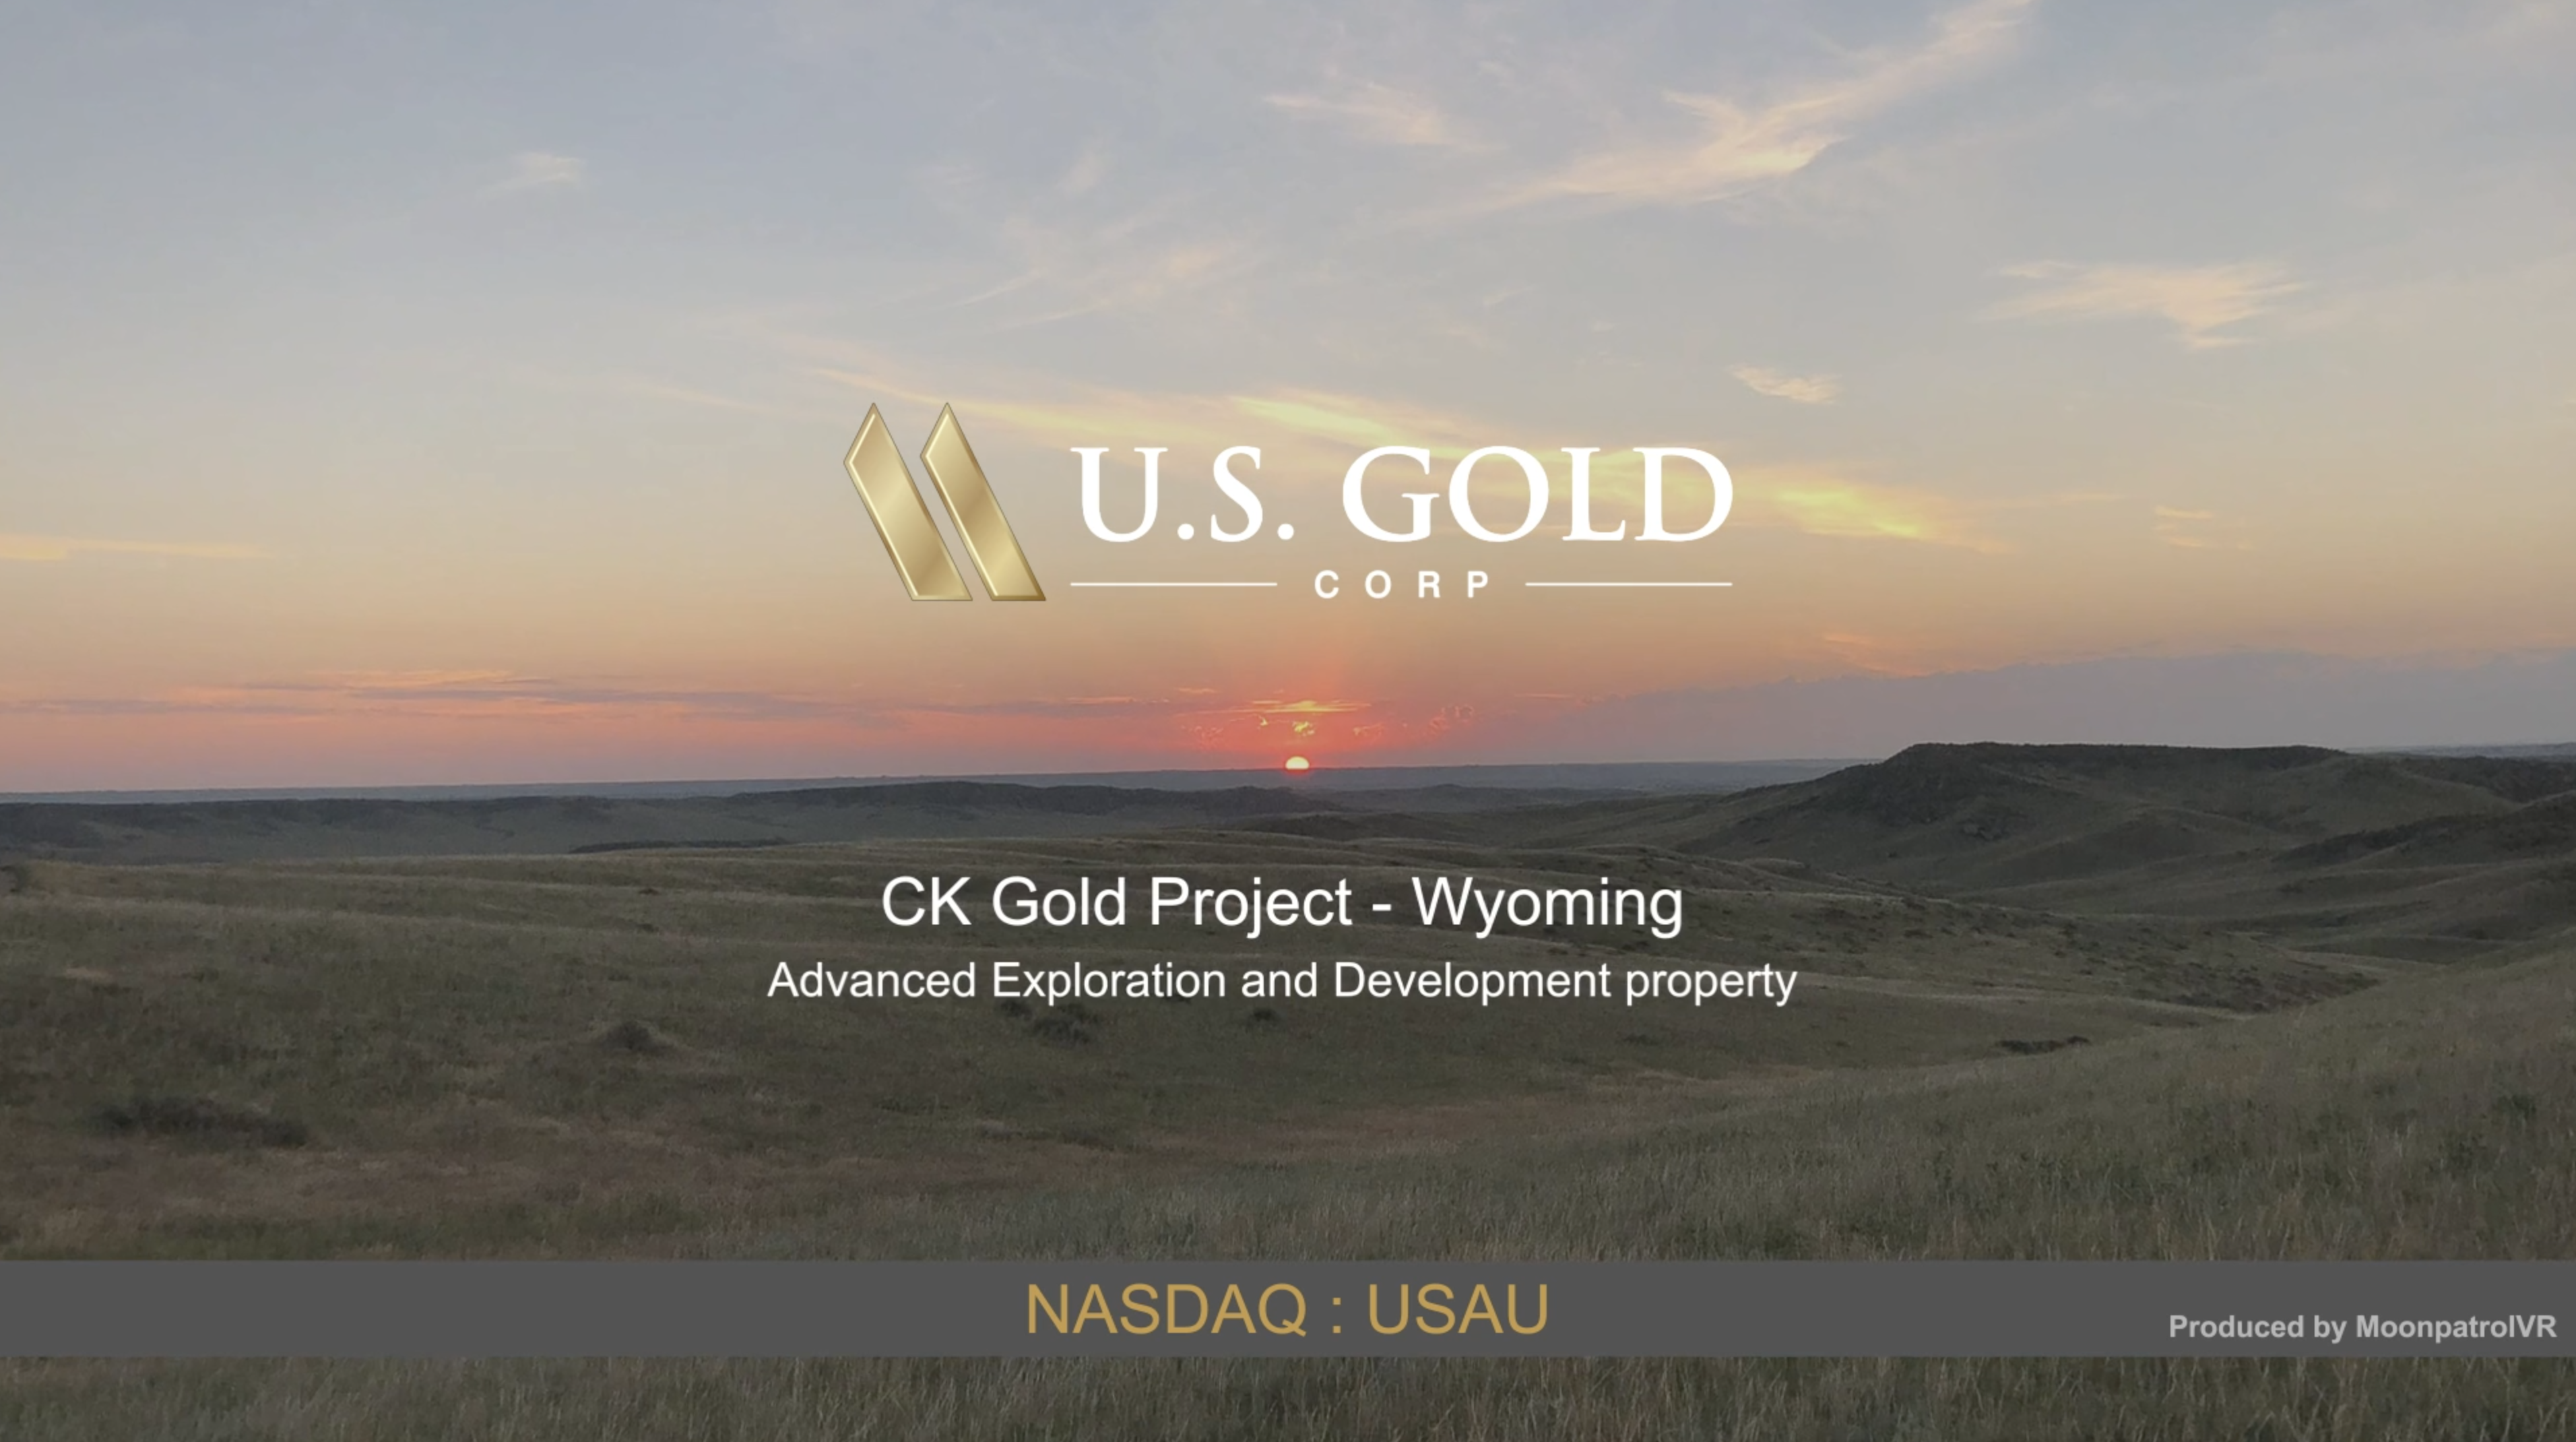 U.S. Gold Corp Scores Permitting Milestone At CK Gold Project, Shares Set New 52-Week High (NASDAQ: USAU)